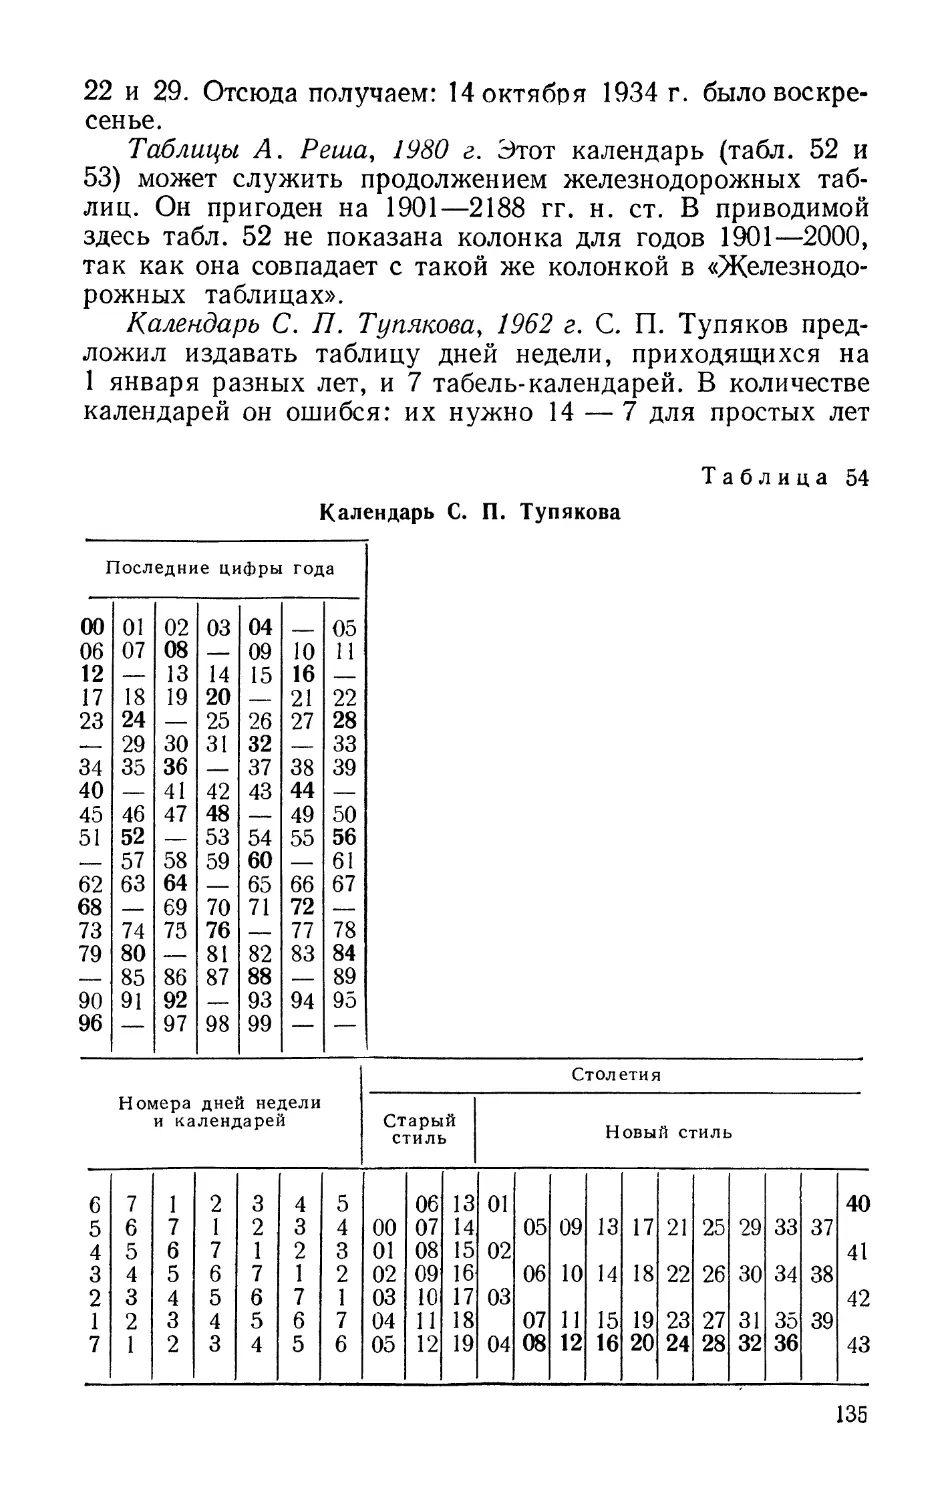 Таблицы А. Реша, 1980 г.
Календарь С. П. Тупякова, 1962 г.